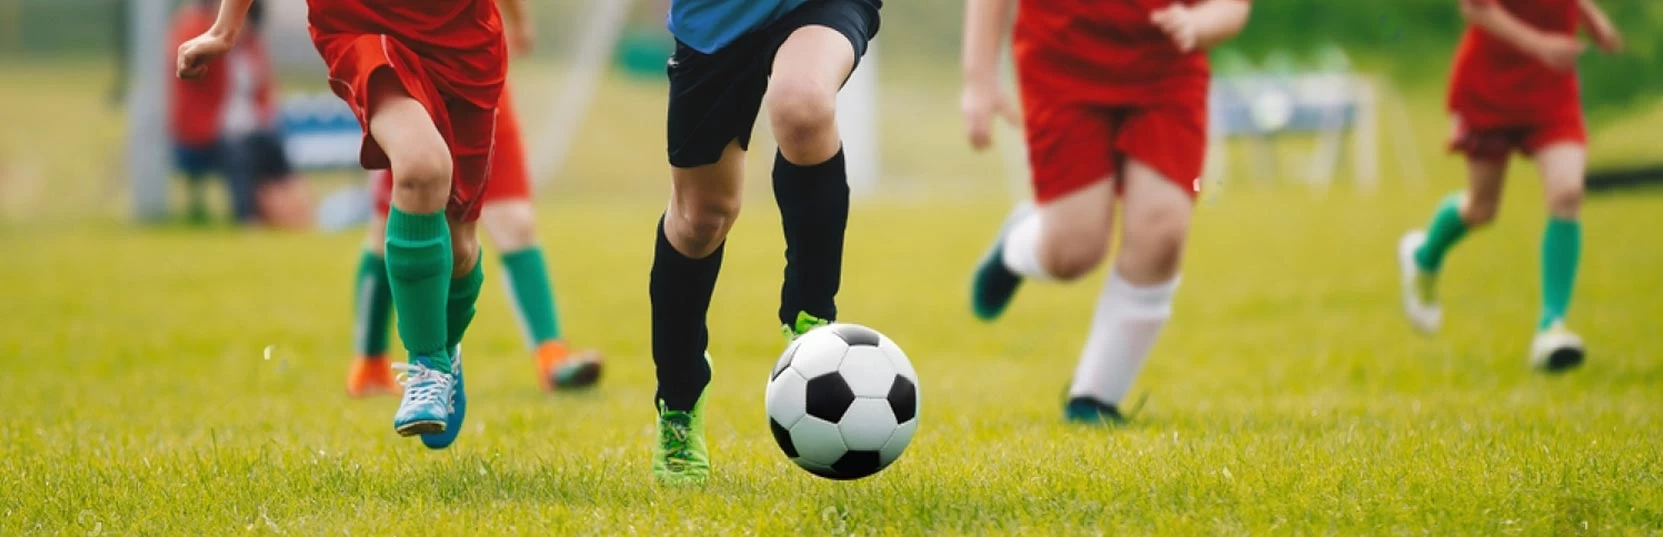 20230725141941_stock-photo-running-soccer-football-players-footballers-kicking-football-match-soccer-school-tournament-1167703315